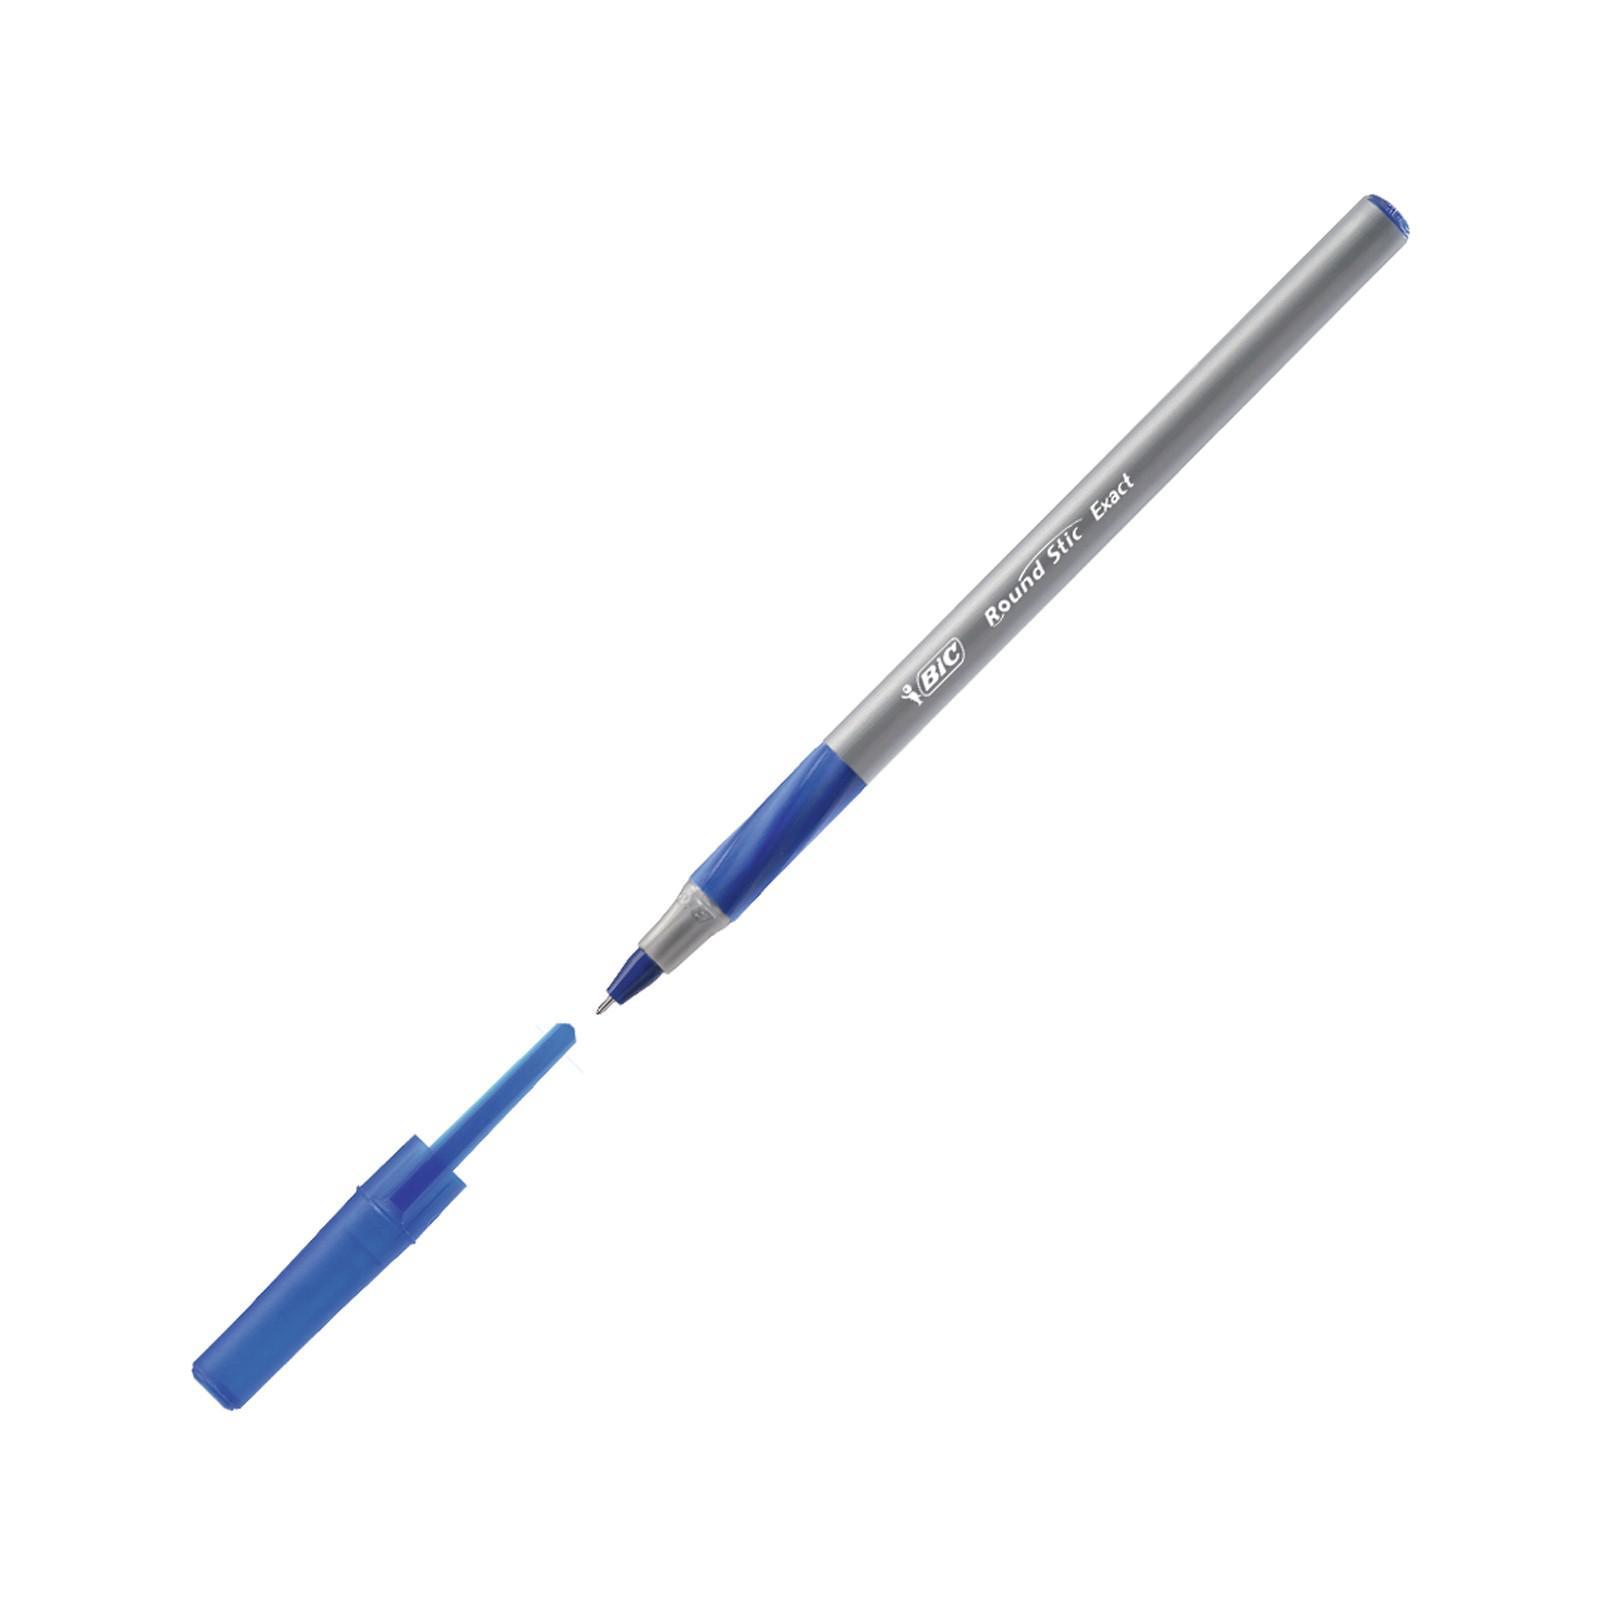 Round stic exact. Ручка шариковая одноразовая BIC Round Stic exact синяя (толщина линии 0.28 мм). Ручка шариковая неавтоматическая BIC раунд стик Экзакт синяя, 918543 0,28мм. Ручка шариковая BIC Round Stic exact синяя 0.7мм грип. Ручка шариковая BIC Round Stic exact, синяя, 035 мм.